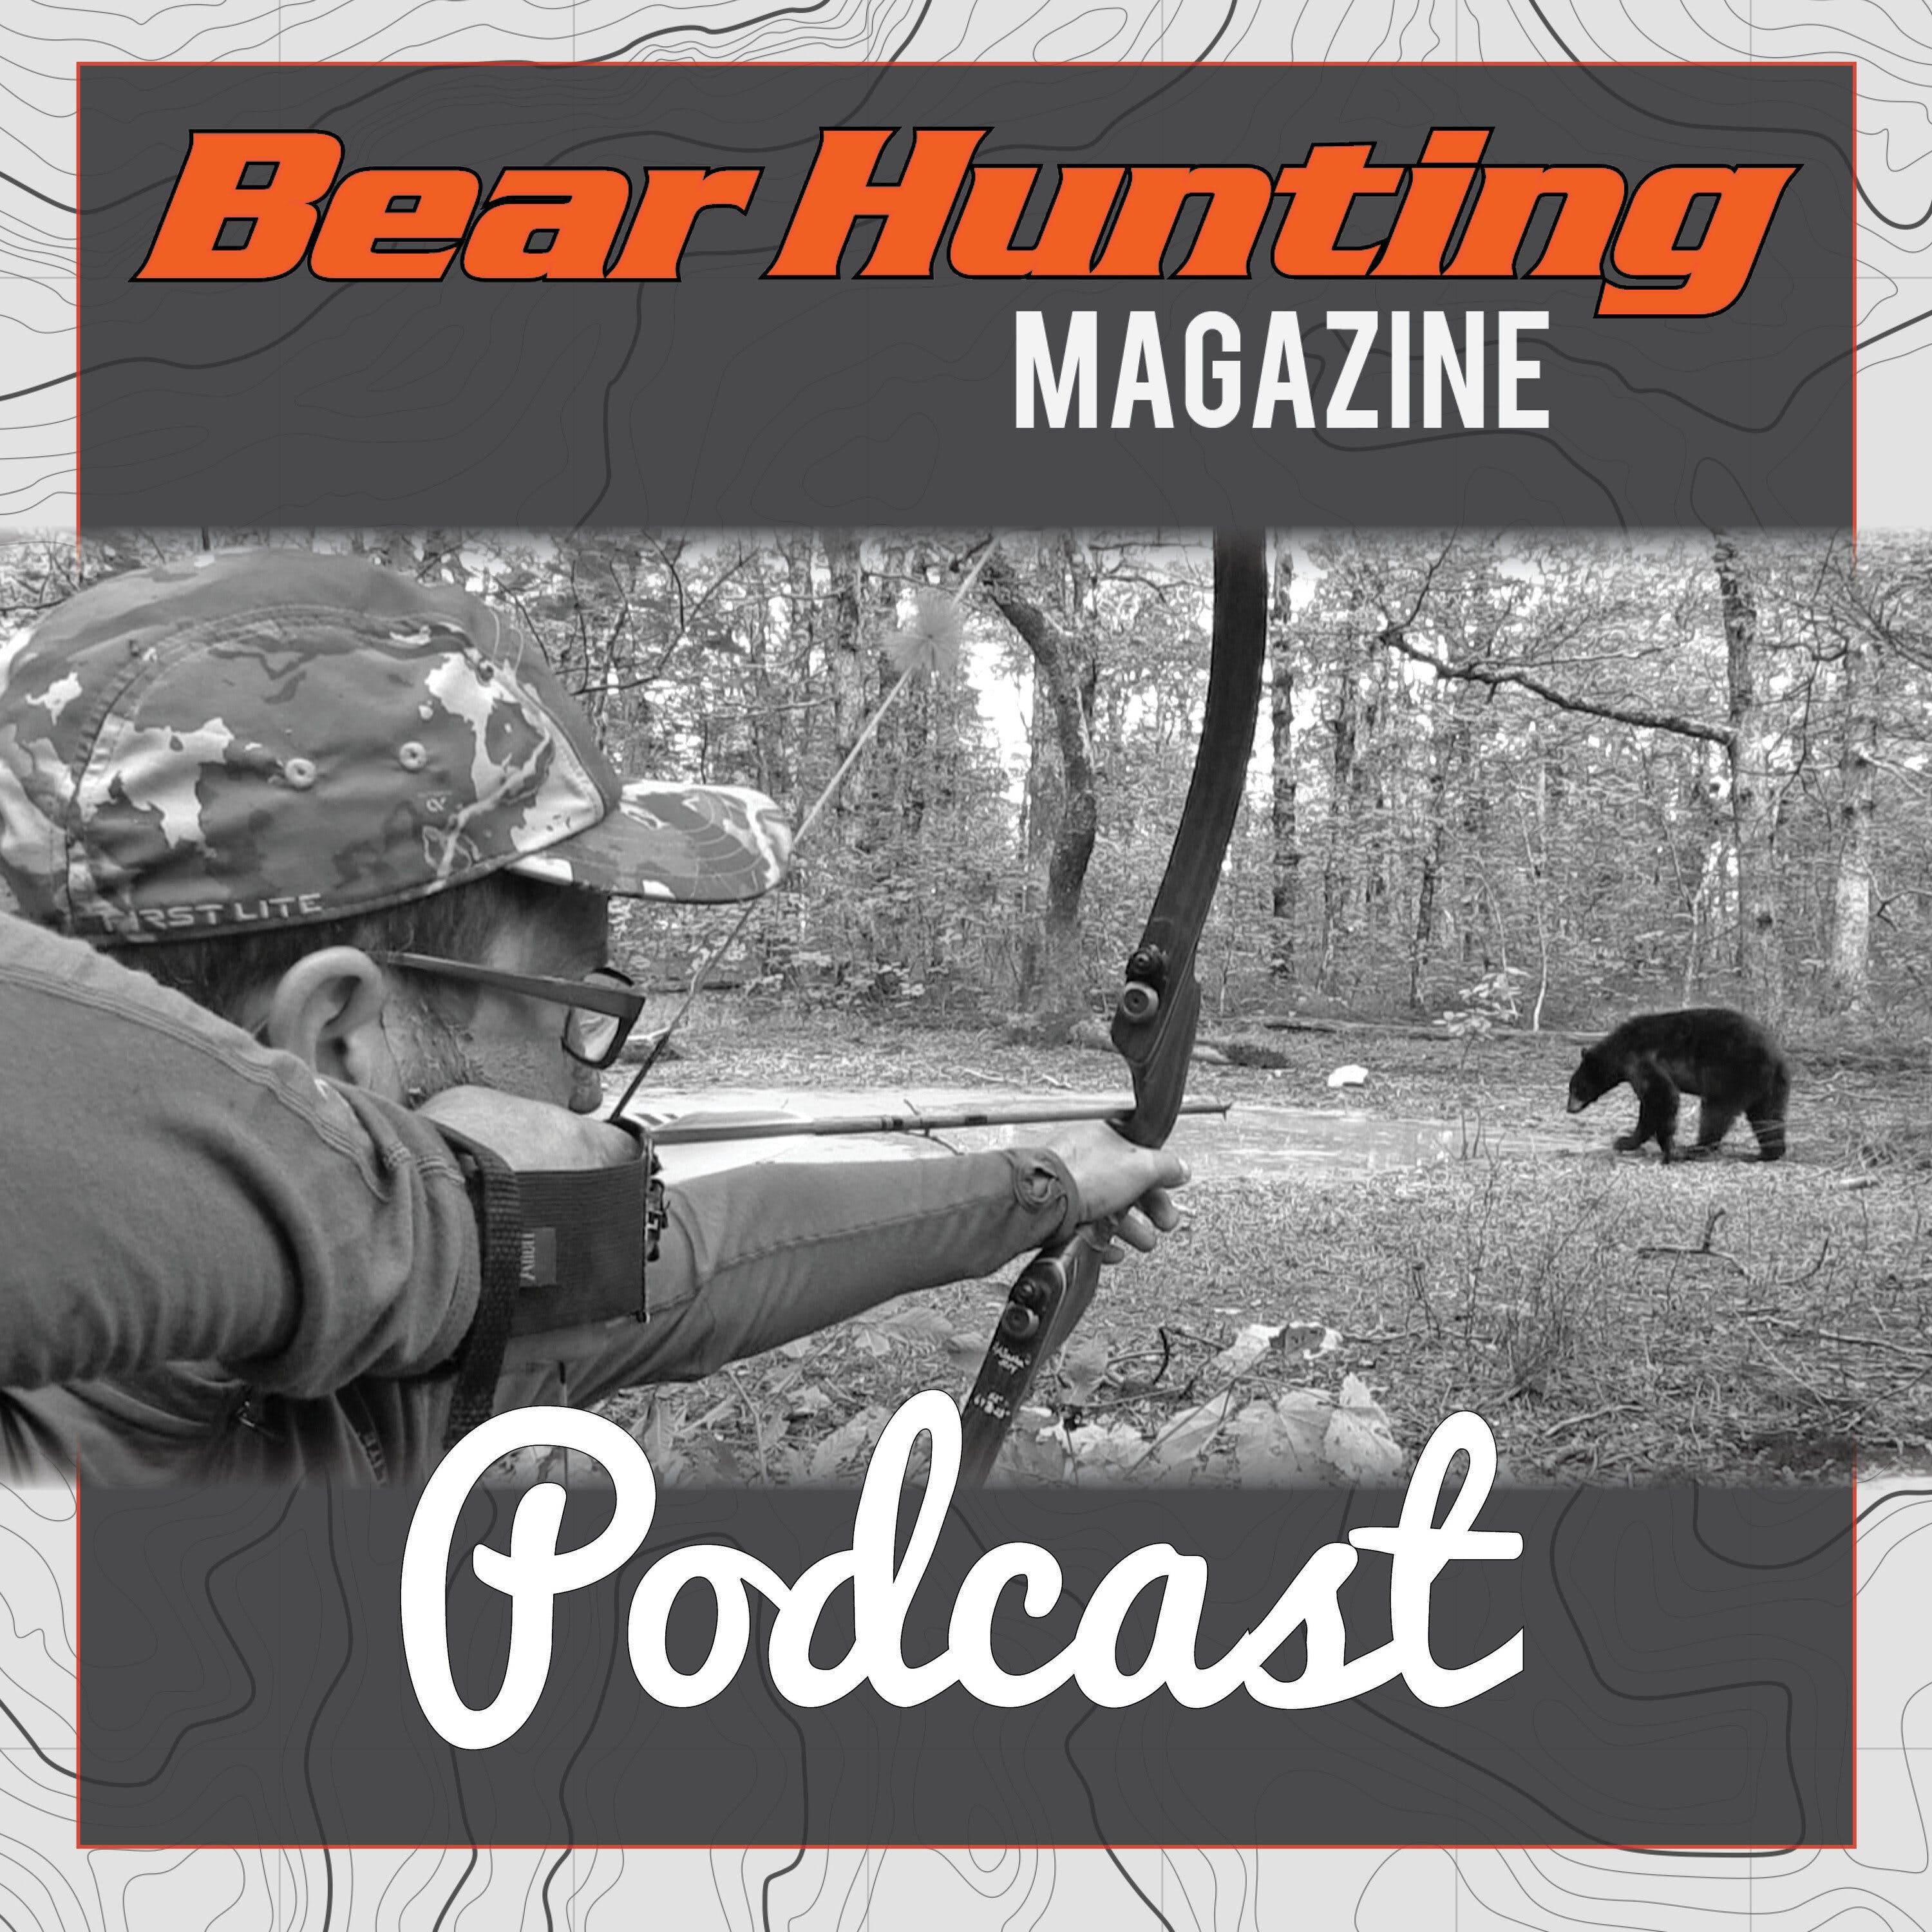 Bear Hunting Magazine Podcast